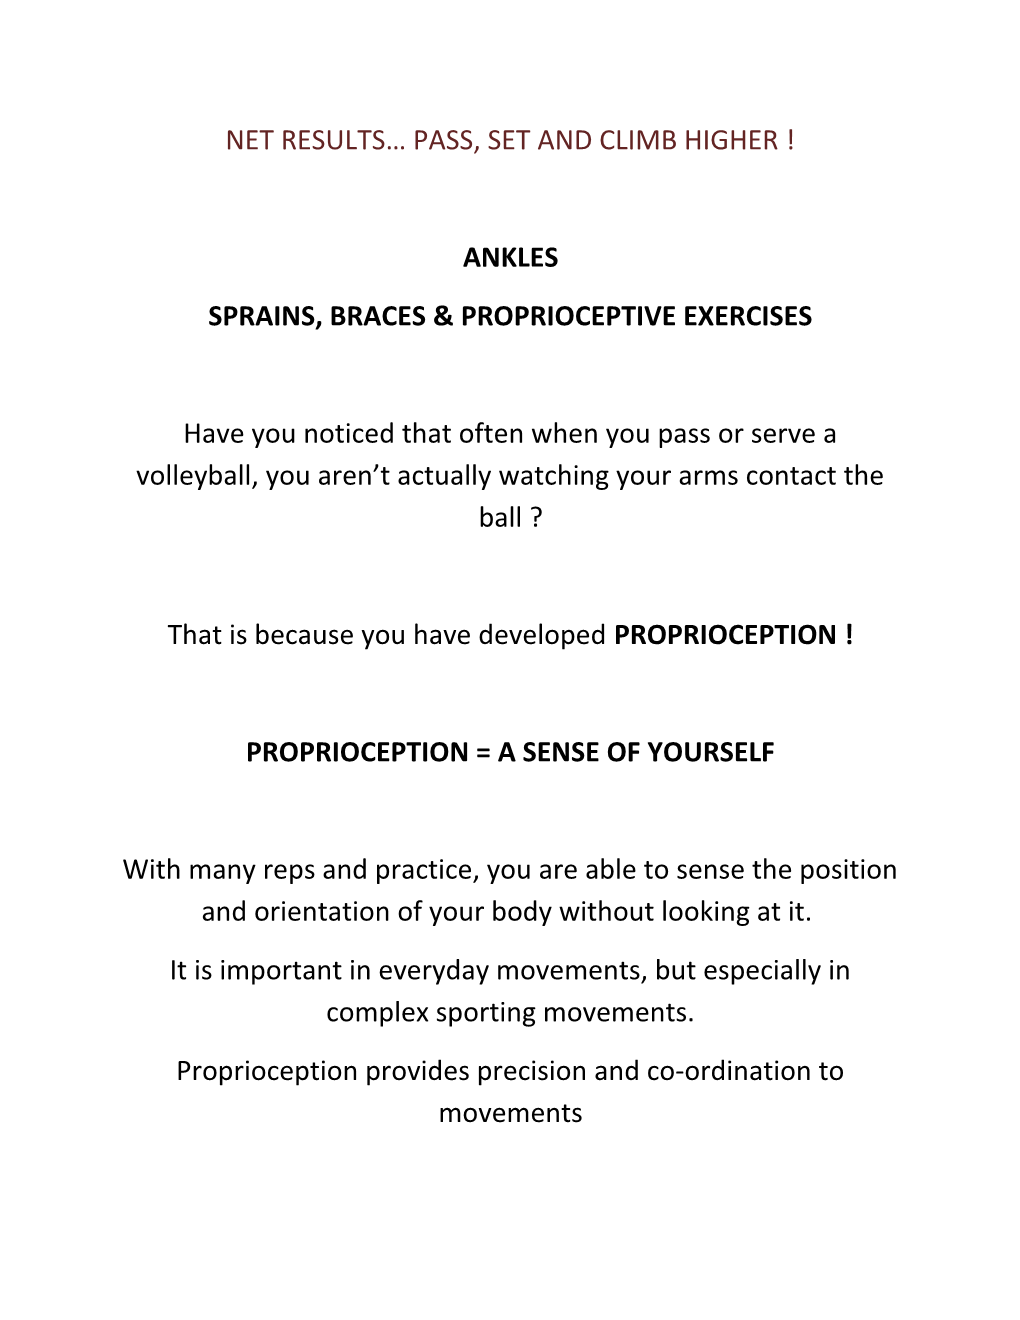 Sprains, Braces & Proprioceptive Exercises